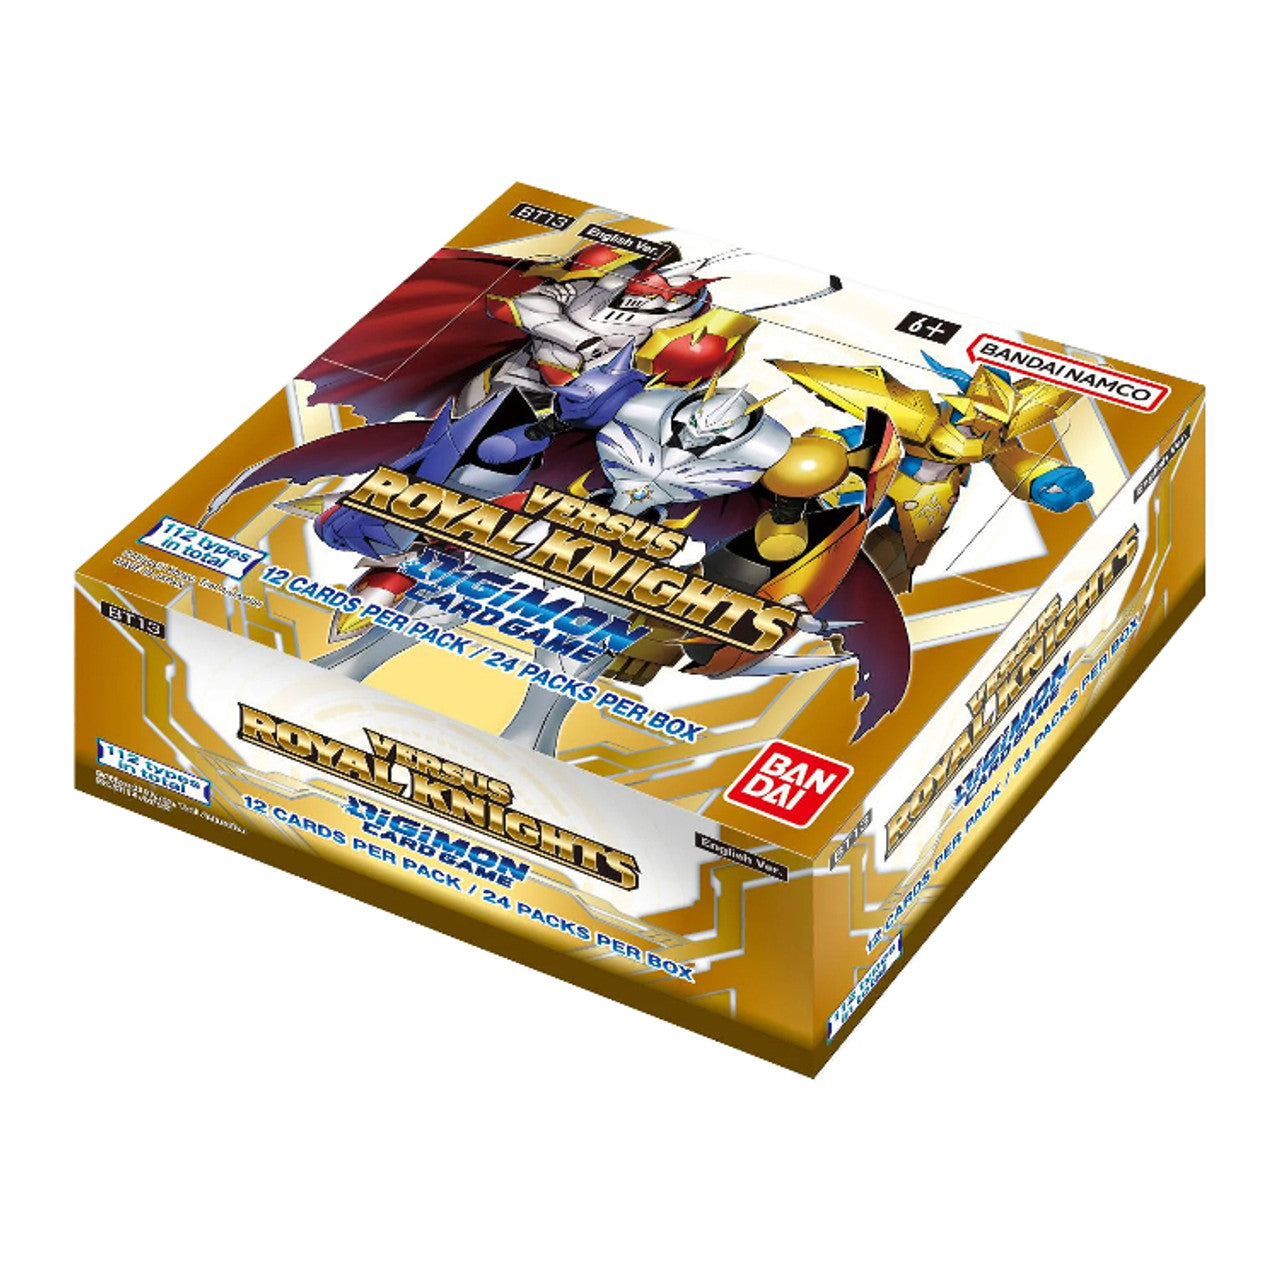 Digimon TCG Booster Box - Versus Royal Knights (24 Packs)